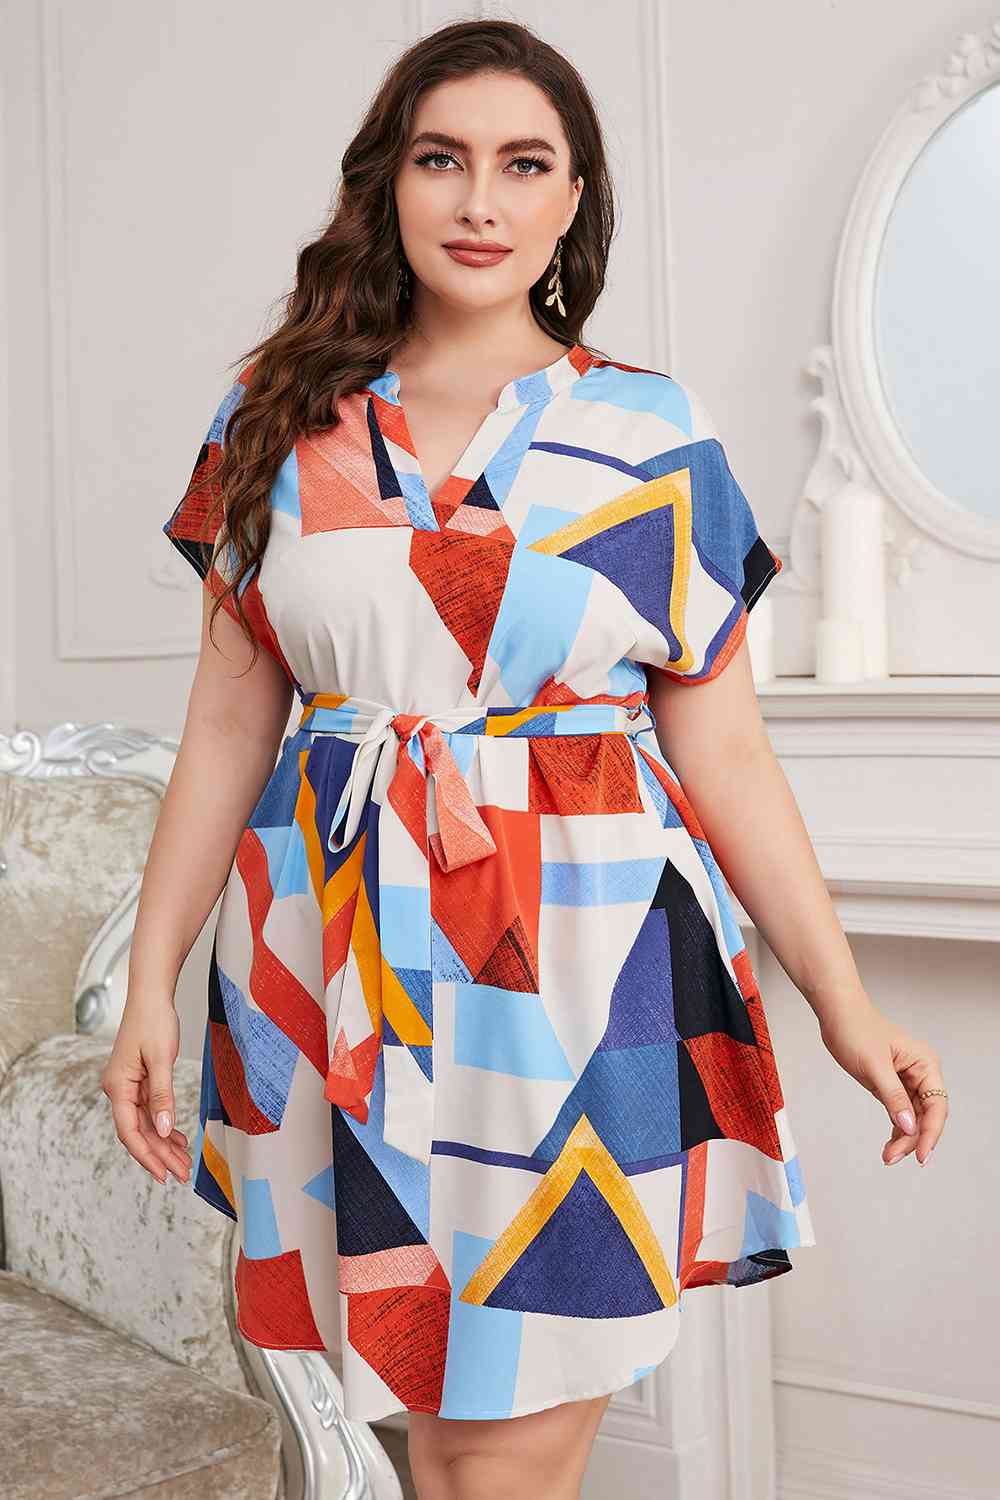 TEEK - Multicolor Plus Size Notched Neck Tie Waist Dress DRESS TEEK Trend 1XL  